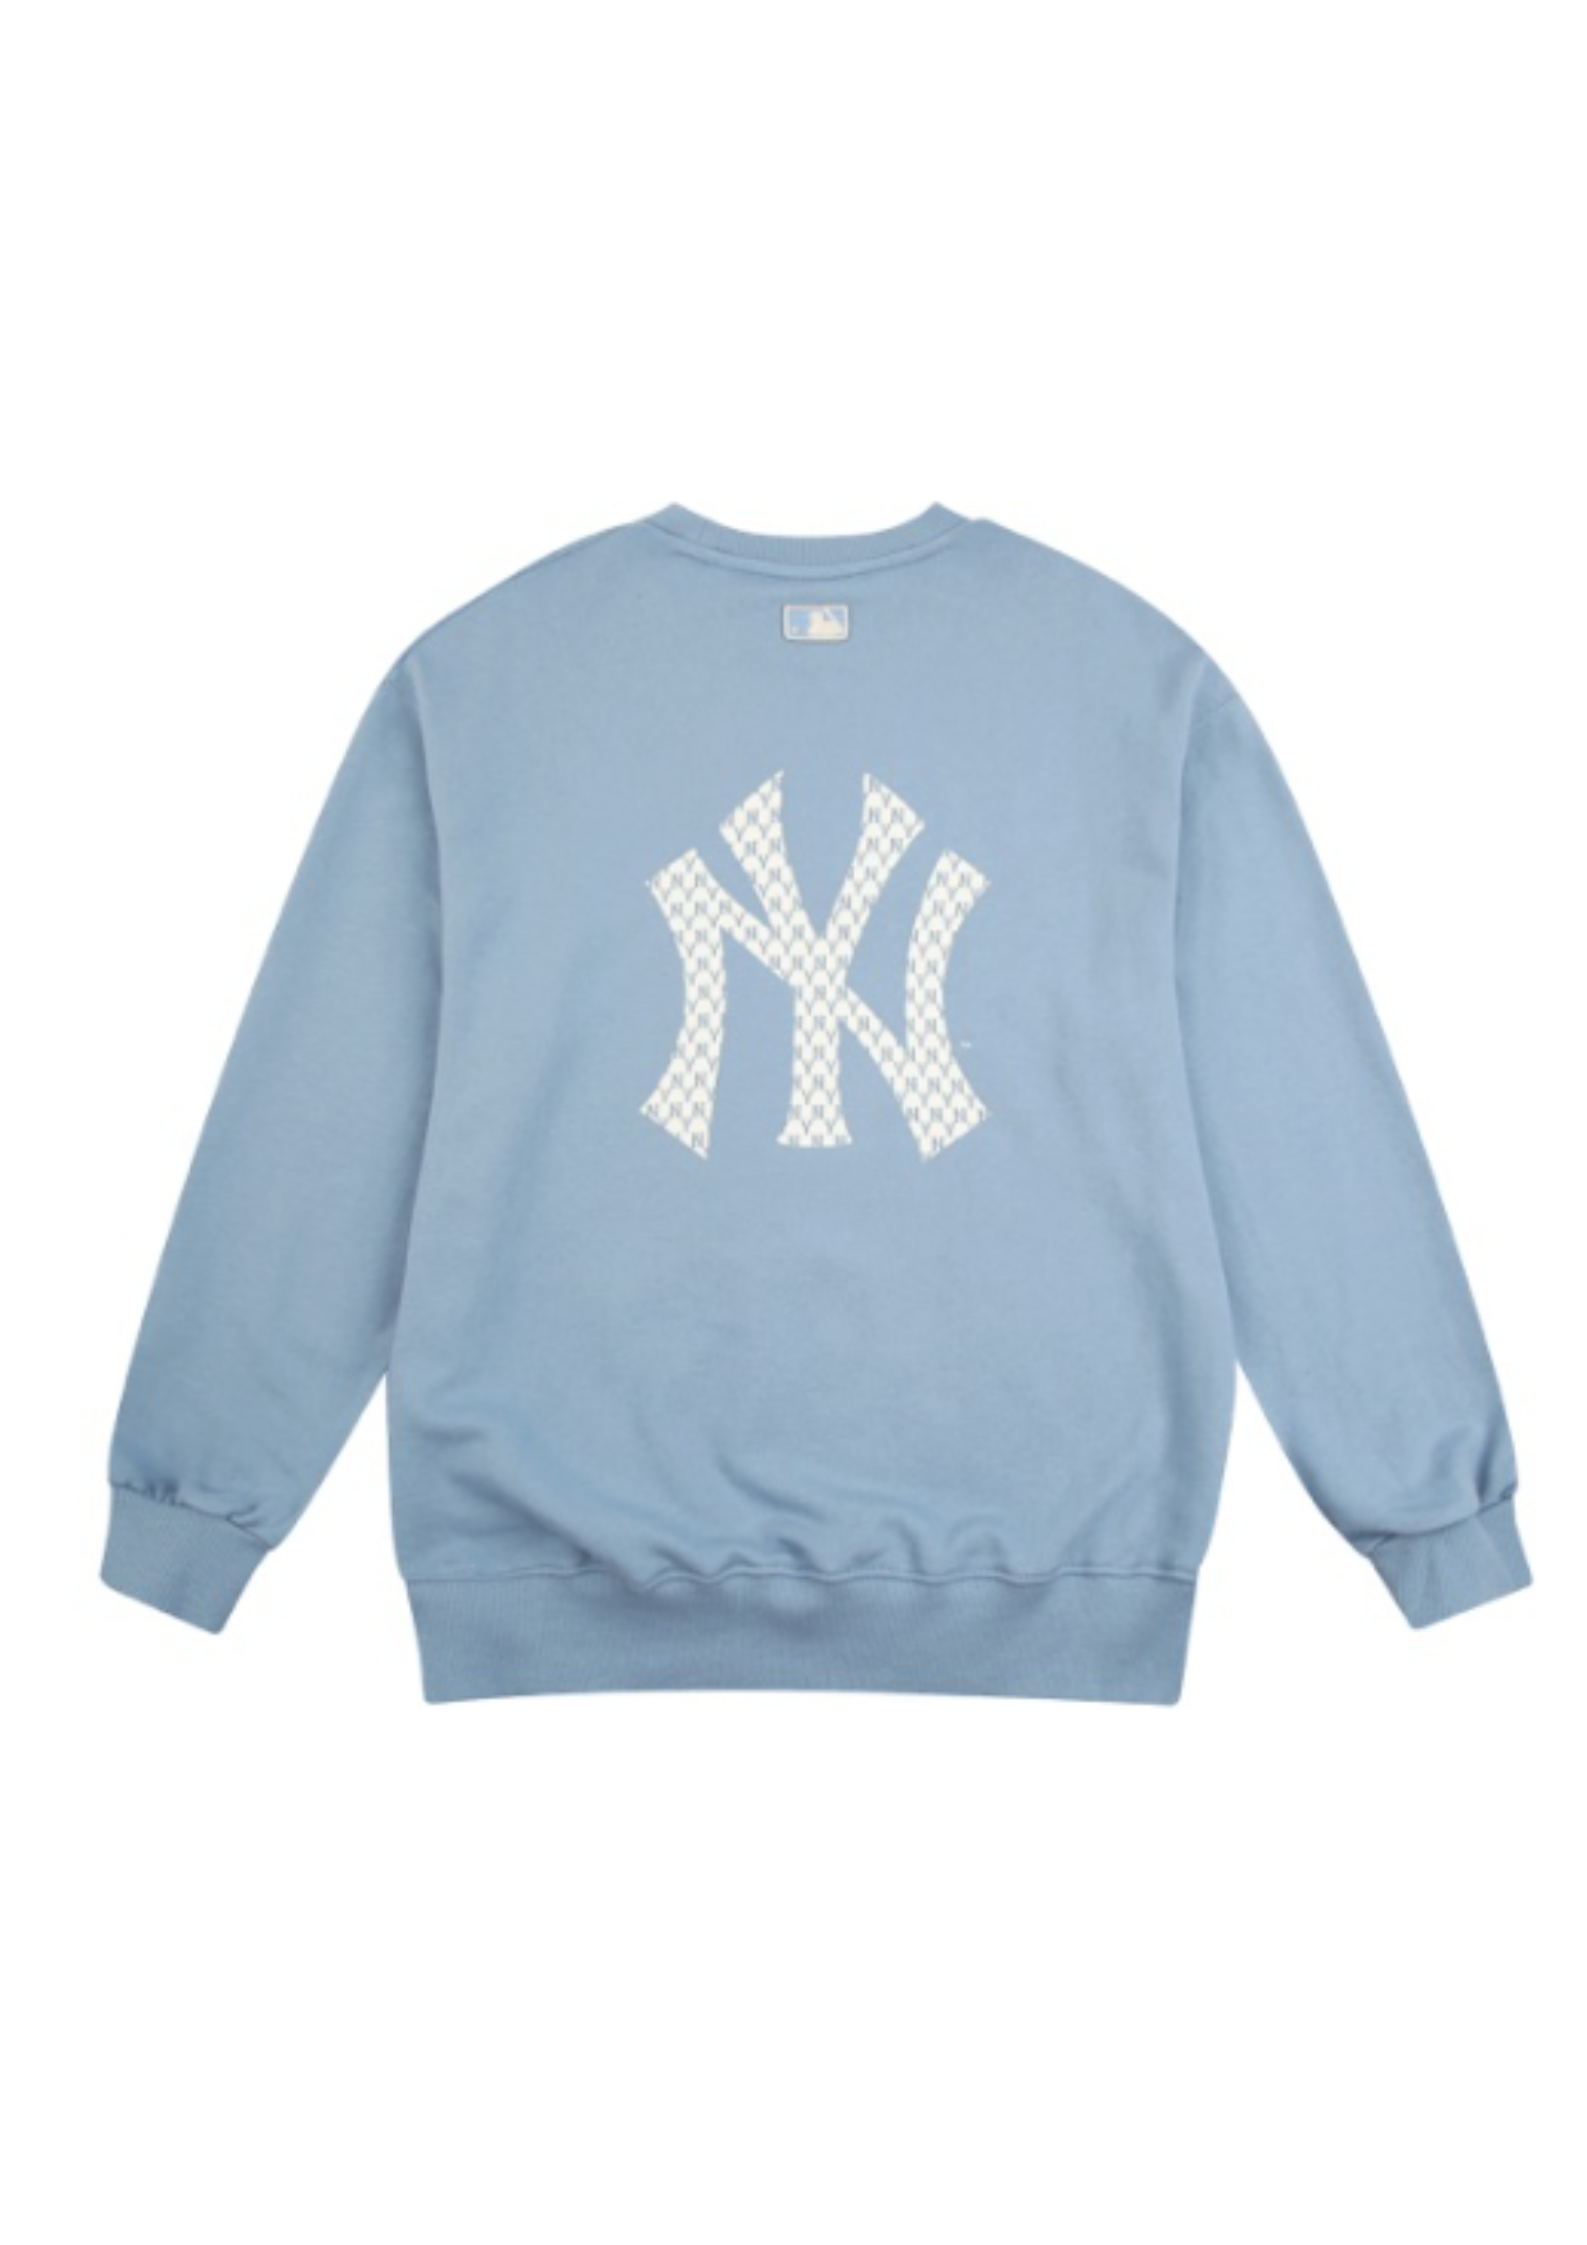 Los angeles Dodgers mlb major league baseball team jersey nintendo nes  pixel Shirt hoodie sweater long sleeve and tank top